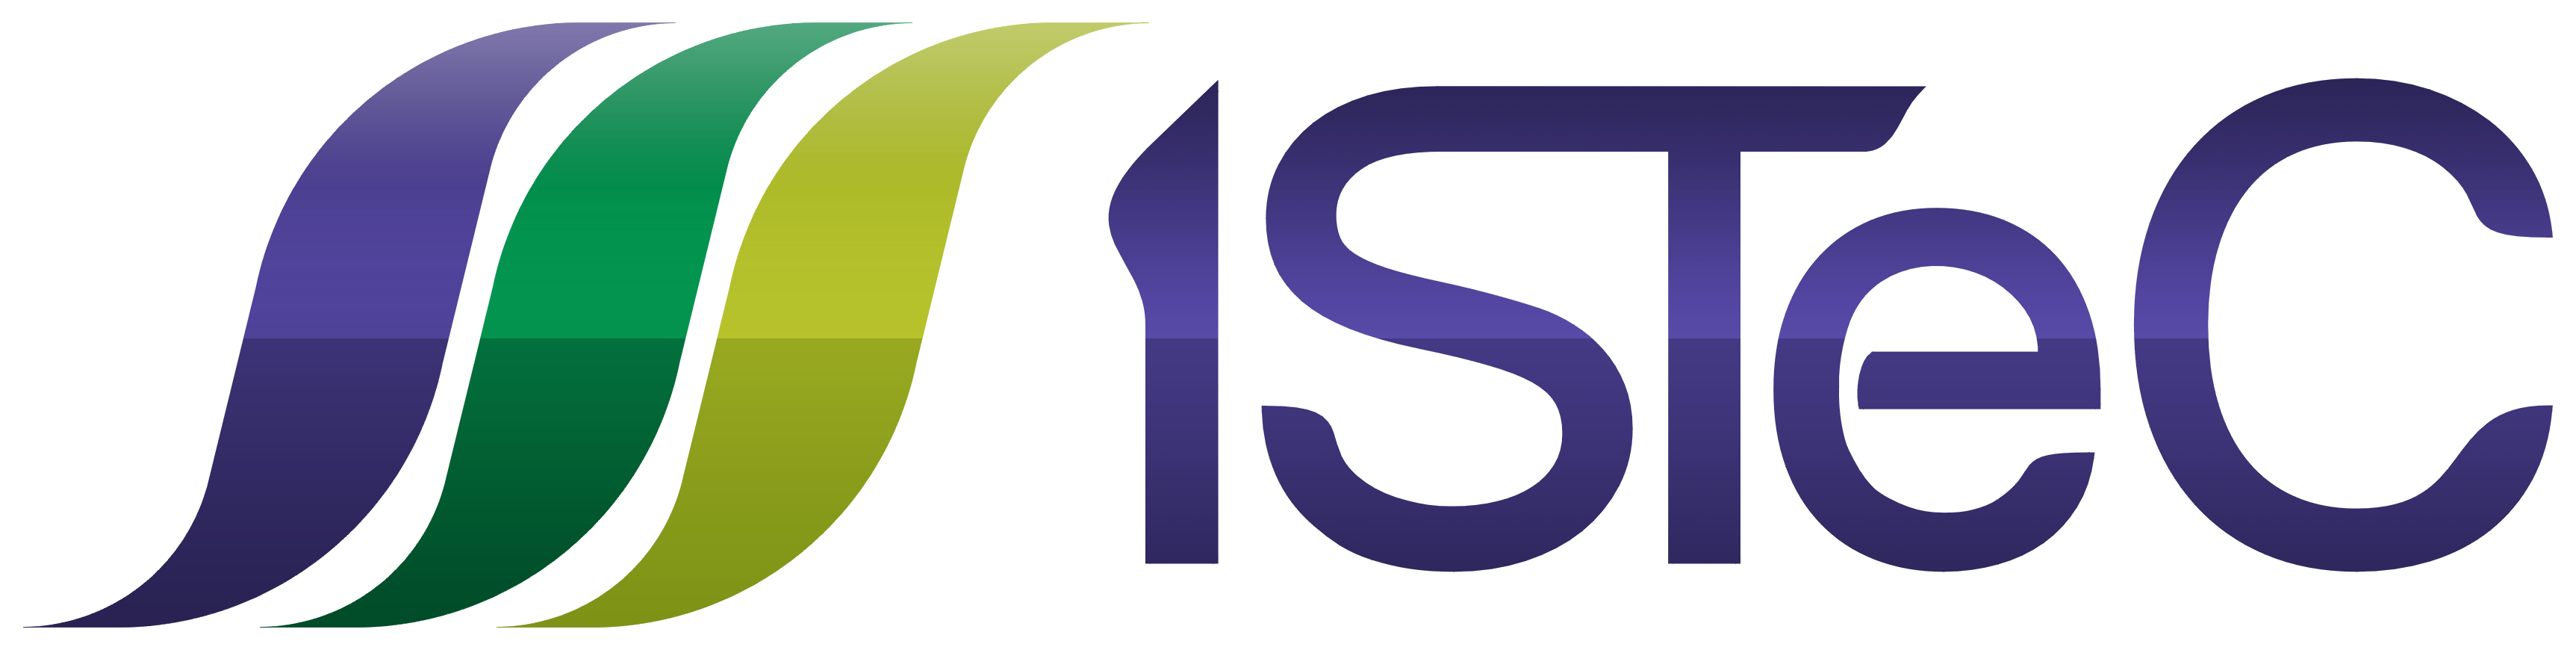 Istec Logo Hemstock Design